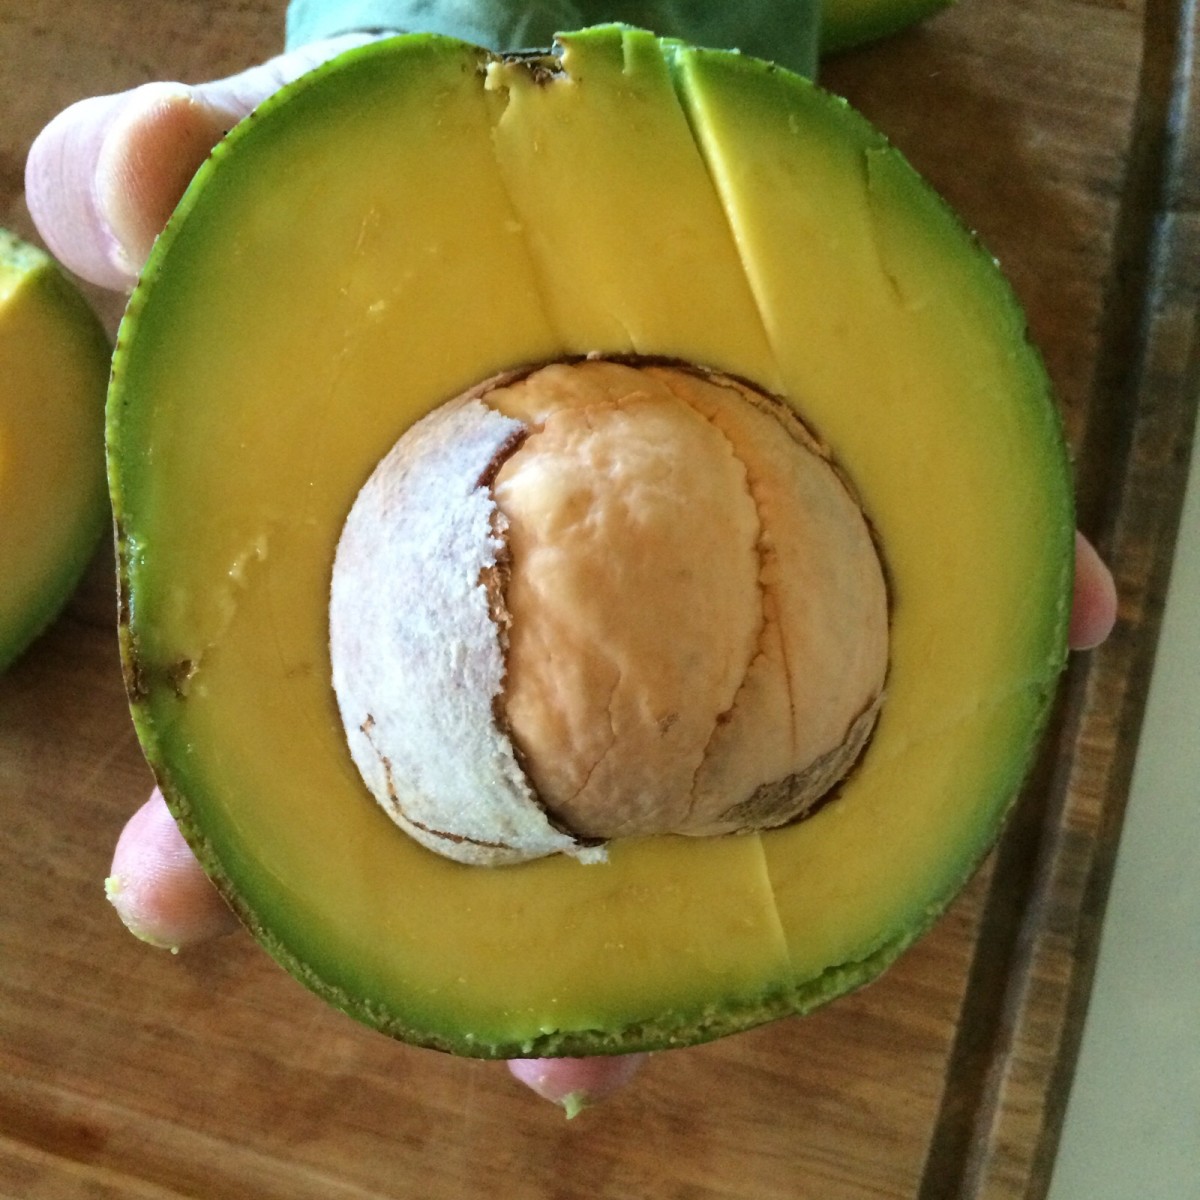 Avocado pit eat avocado FI